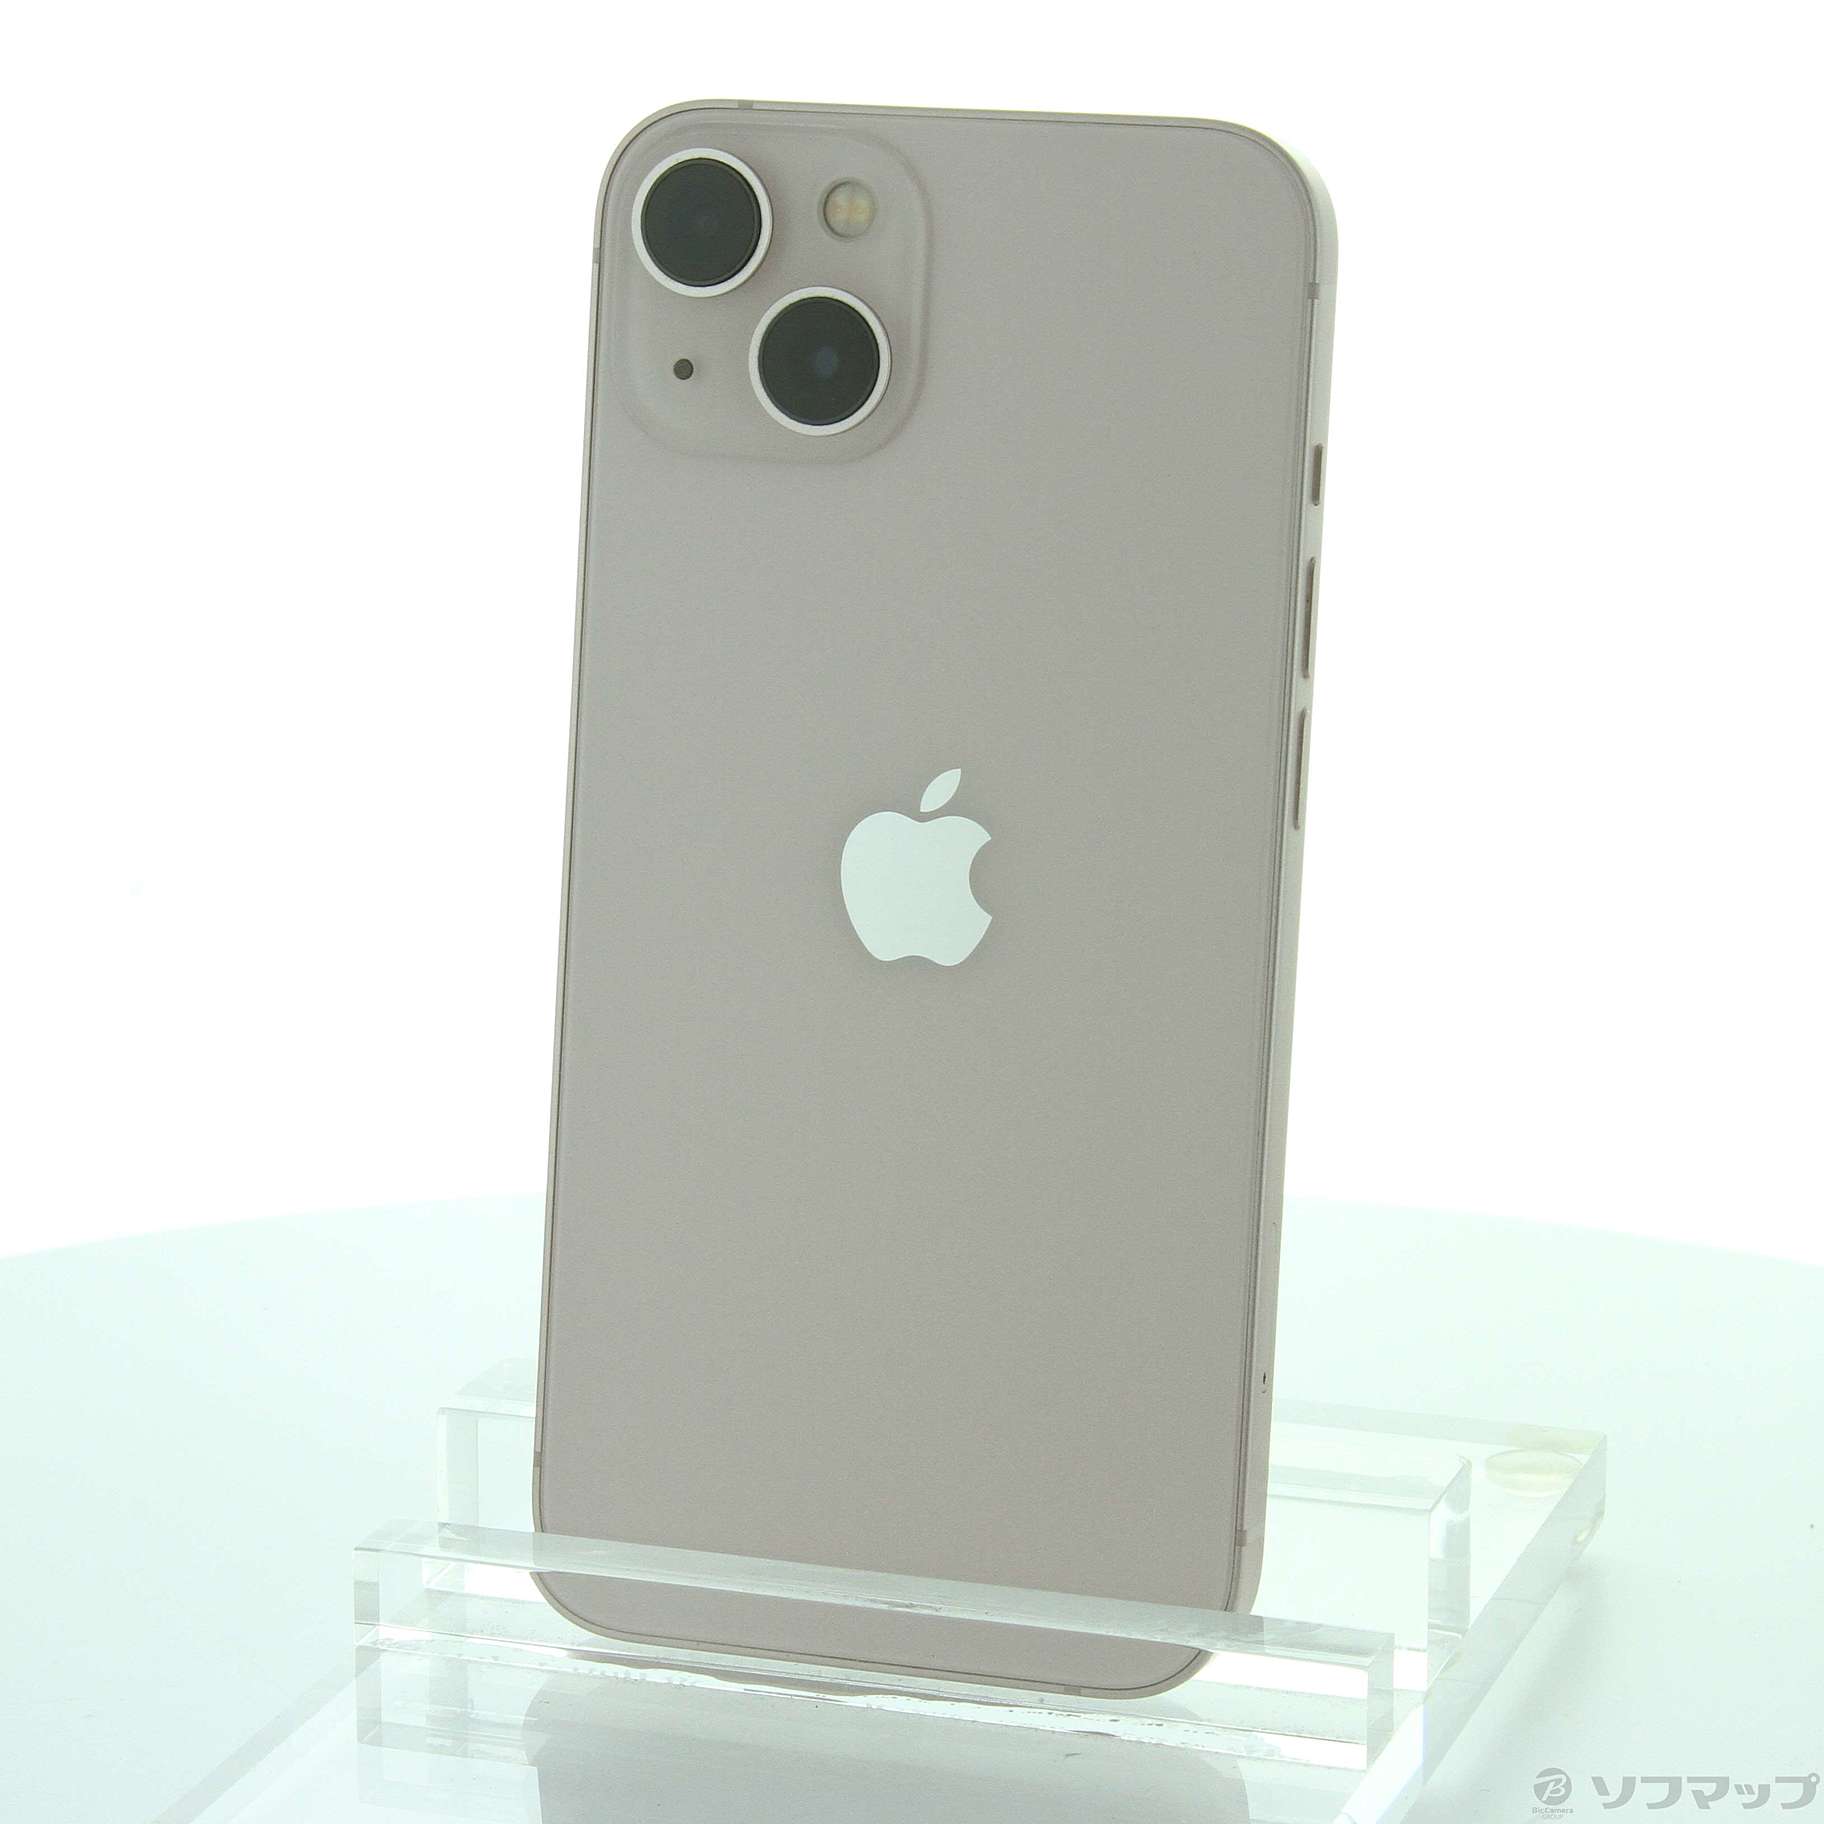 Apple iPhone13 128GB ピンク SIMフリー